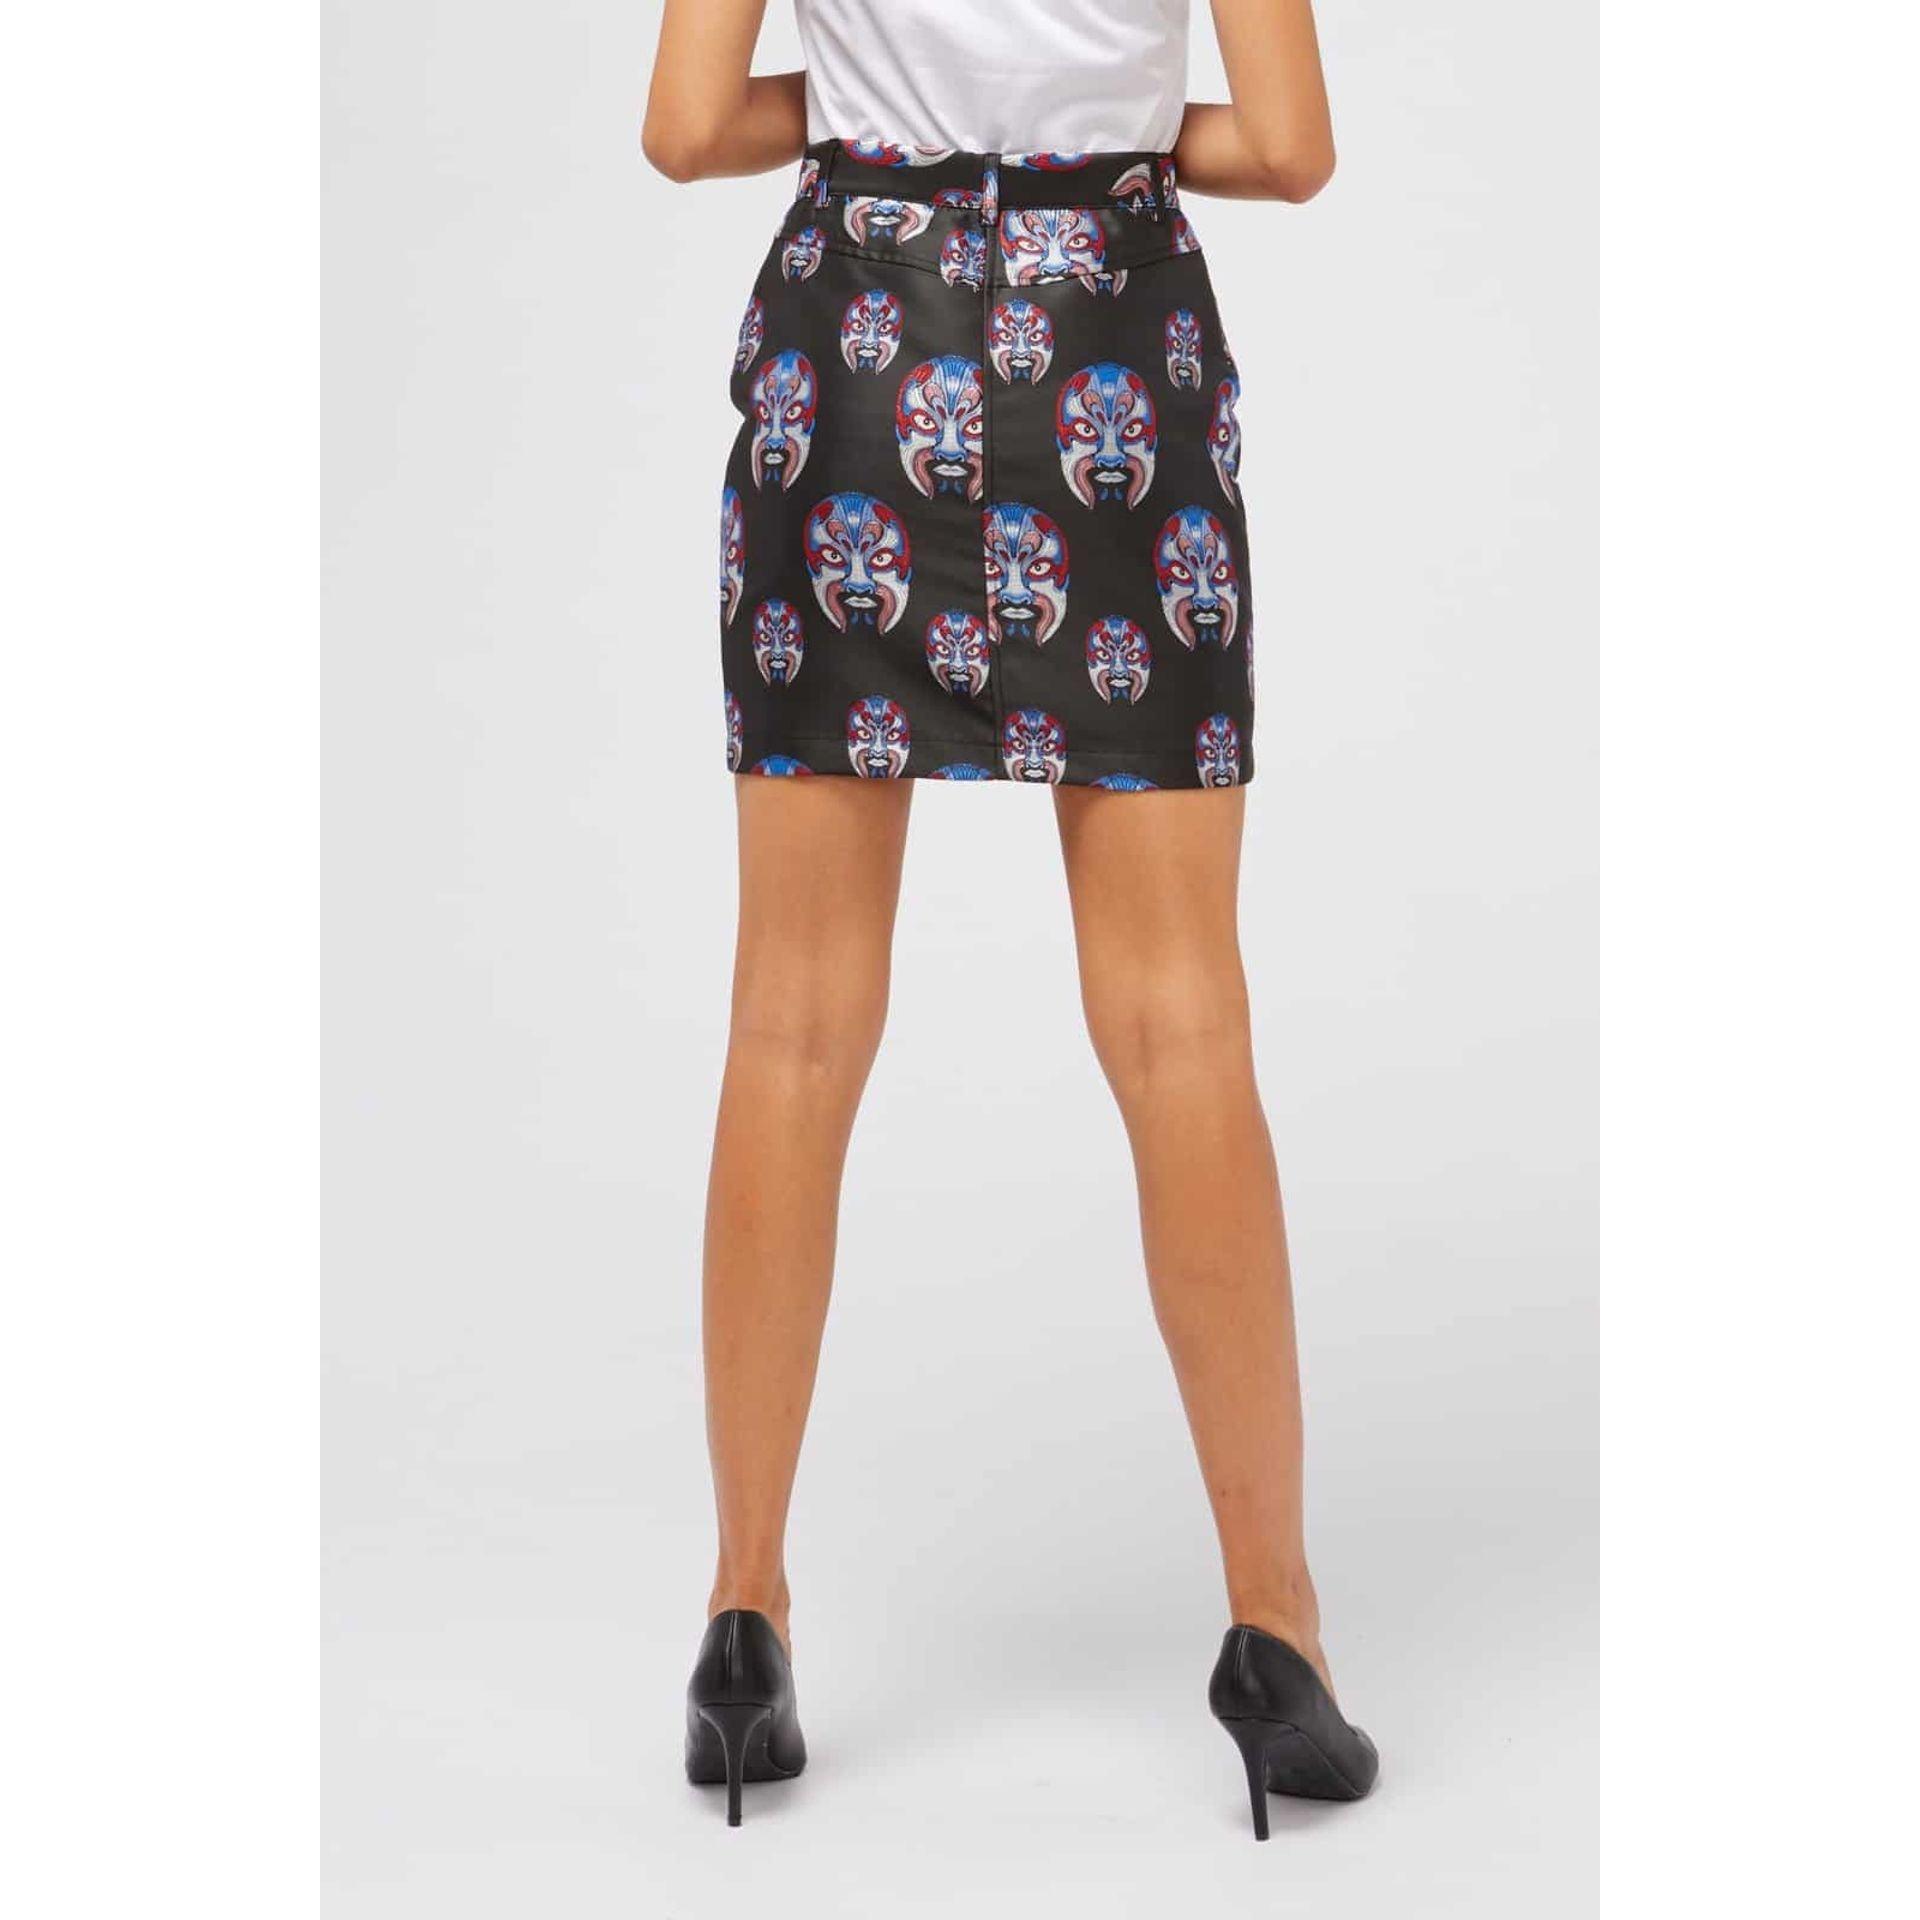 Custo Barcelona Skirts - TheNumber1Shop.com